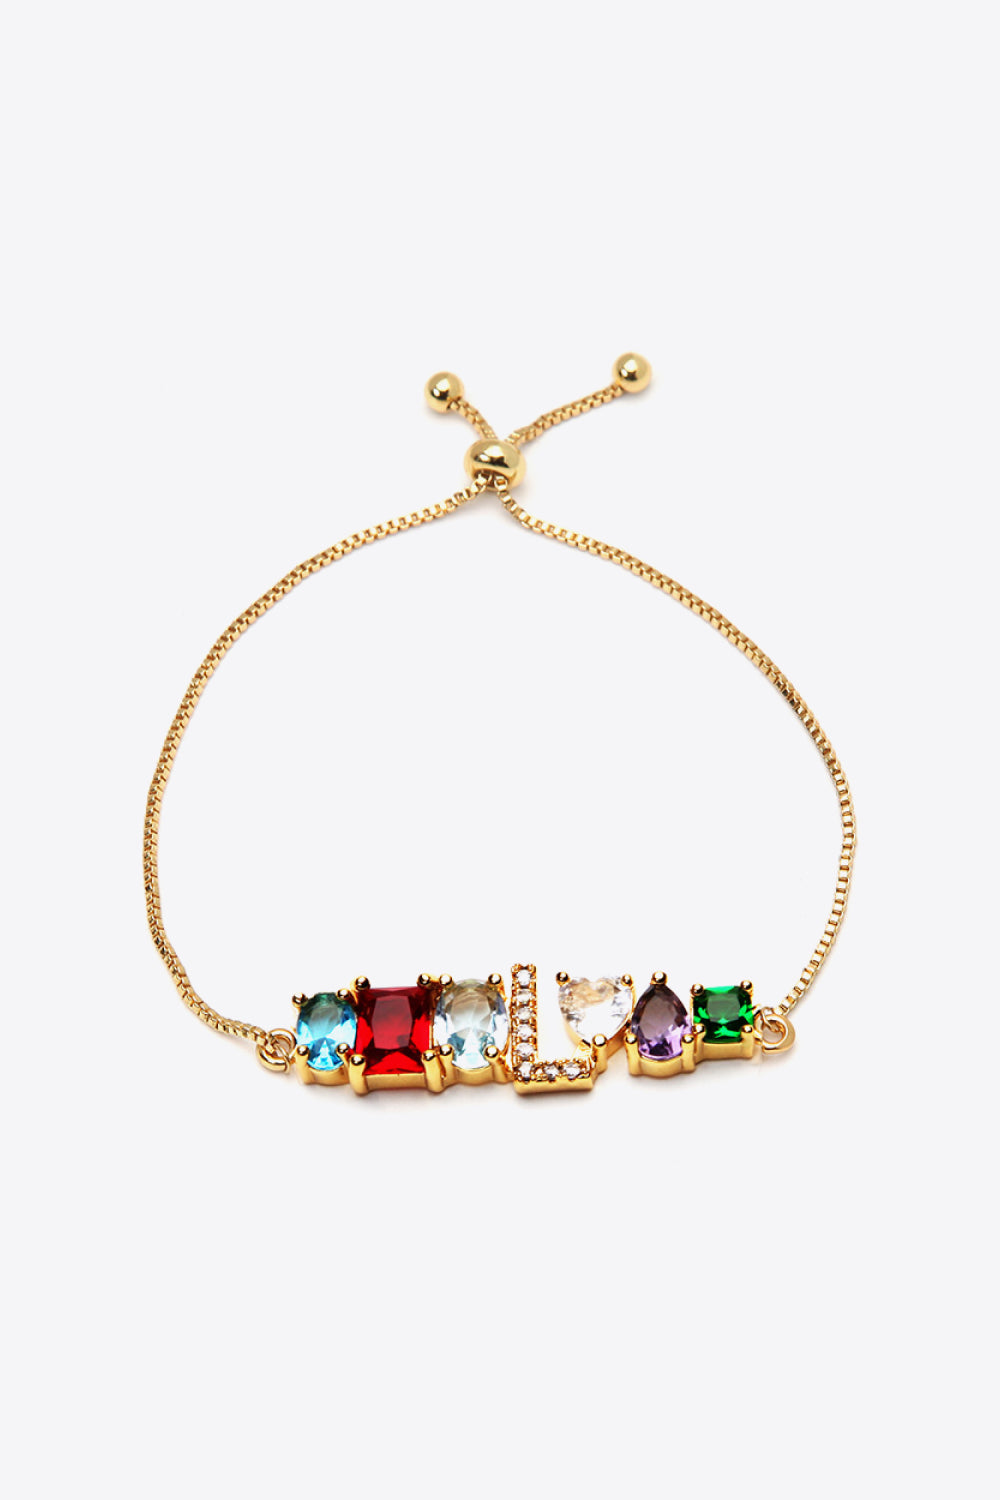 K to T Zircon Bracelet - L / One Size - Women’s Jewelry - Bracelets - 4 - 2024